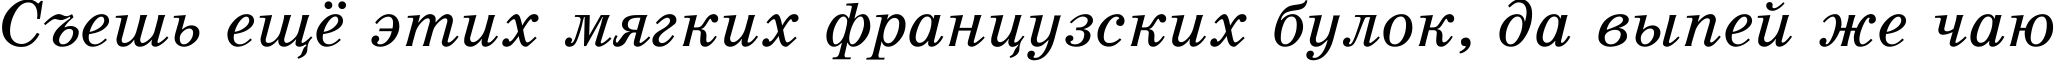 Пример написания шрифтом SchoolBookAC Italic текста на русском